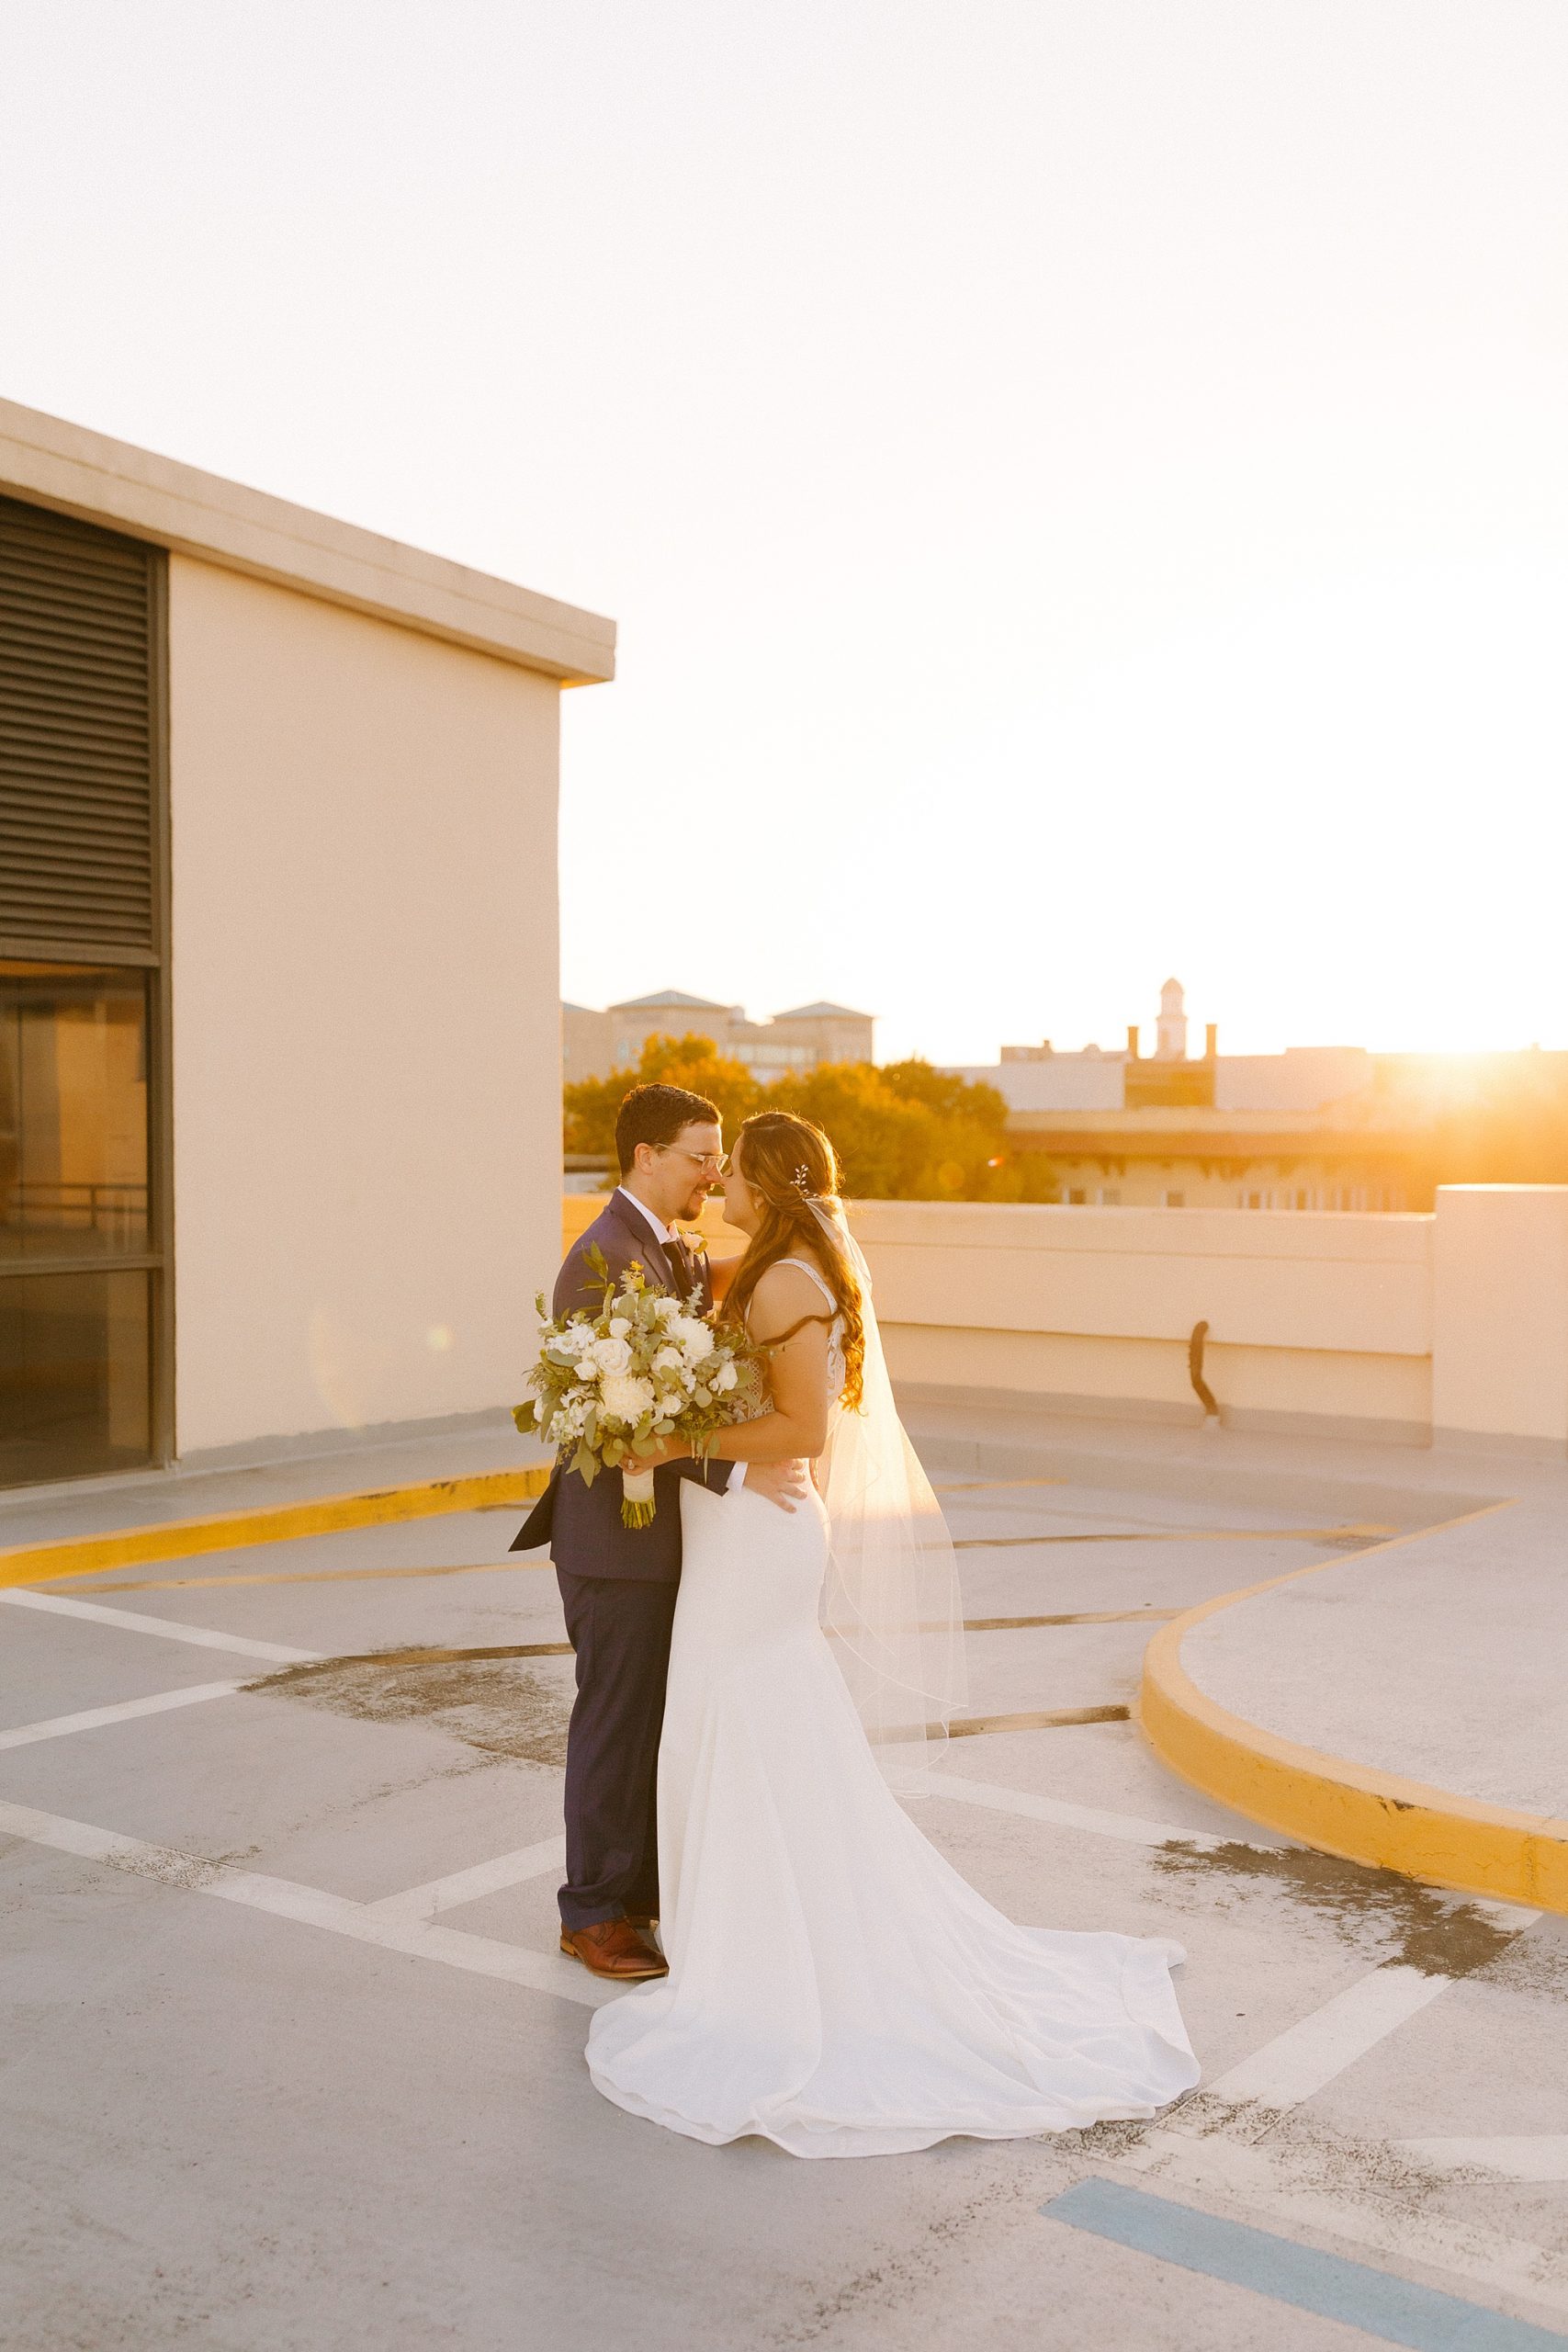 Downtown Lakeland sunset wedding portraits on hotel roof